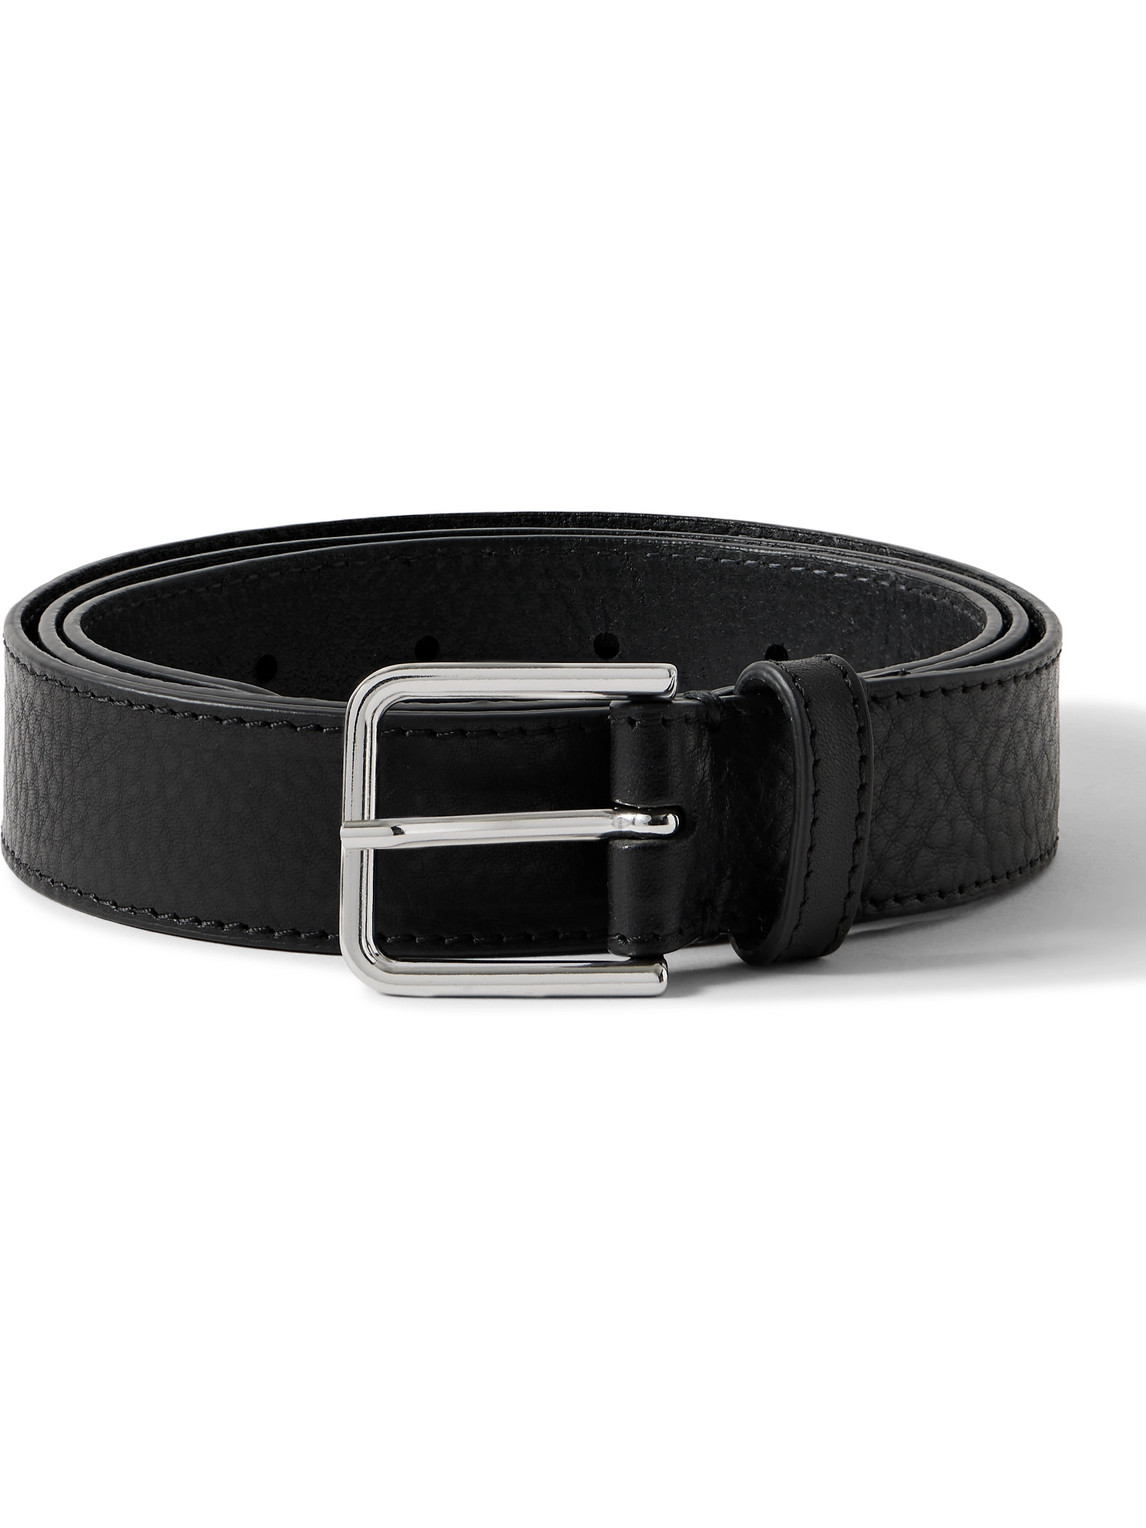 The Frankie Shop 3cm Toni Full-grain Leather Belt In Black